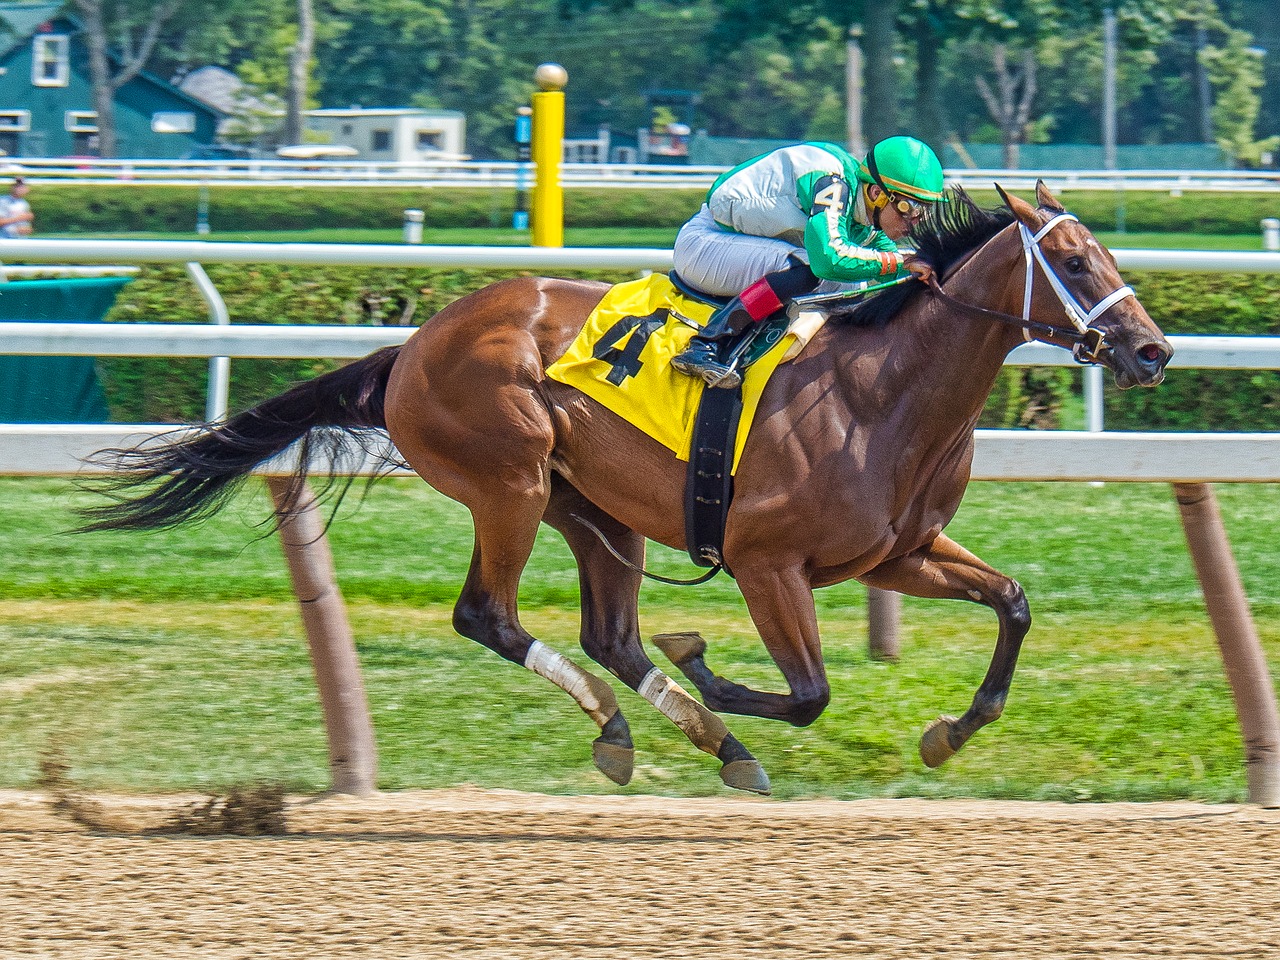 Download free photo of Race horse,jockey,horse,horse racing,speed - from needpix.com